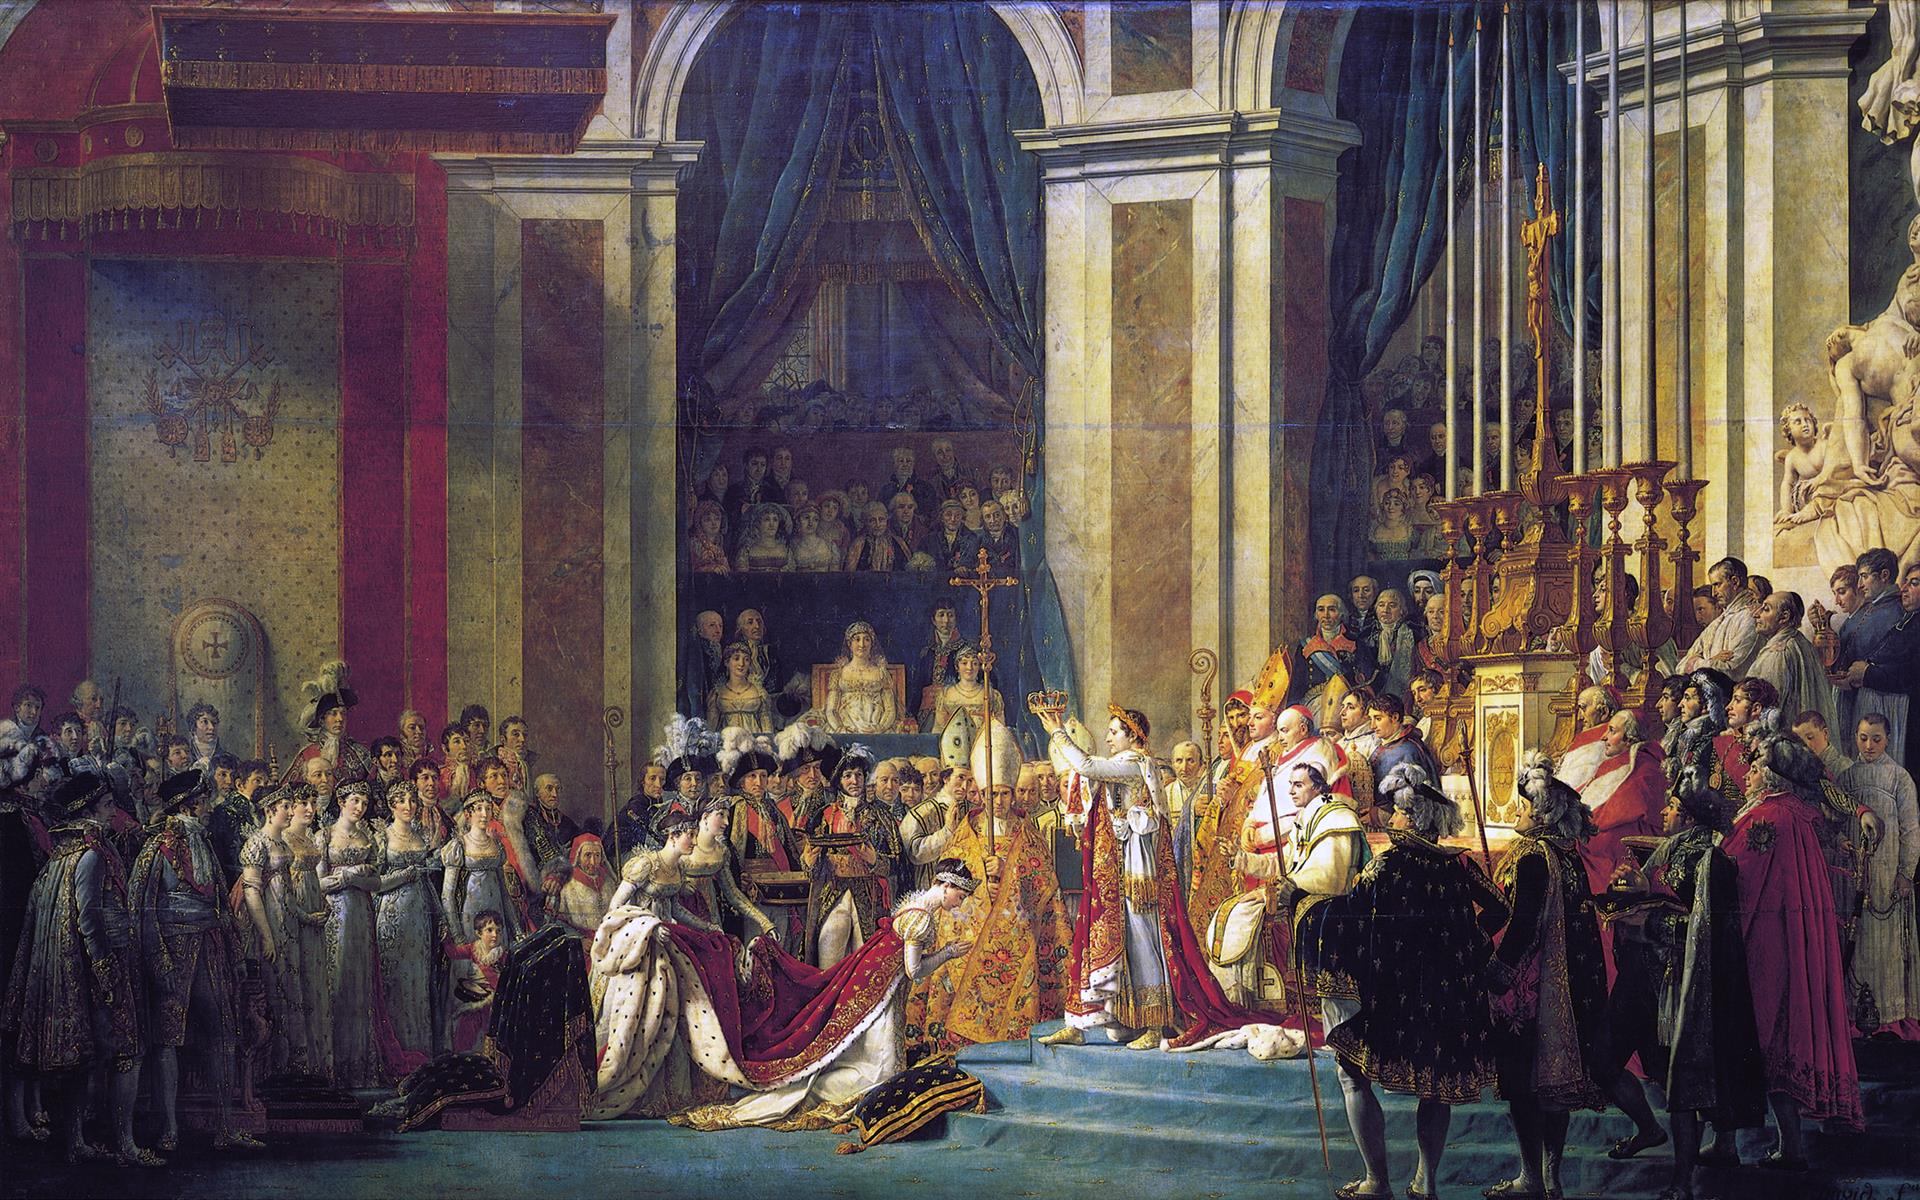 تكريس الامبراطور نابليون - The Consecration of the Emperor Napoleon - مقهى جرير الثقافي